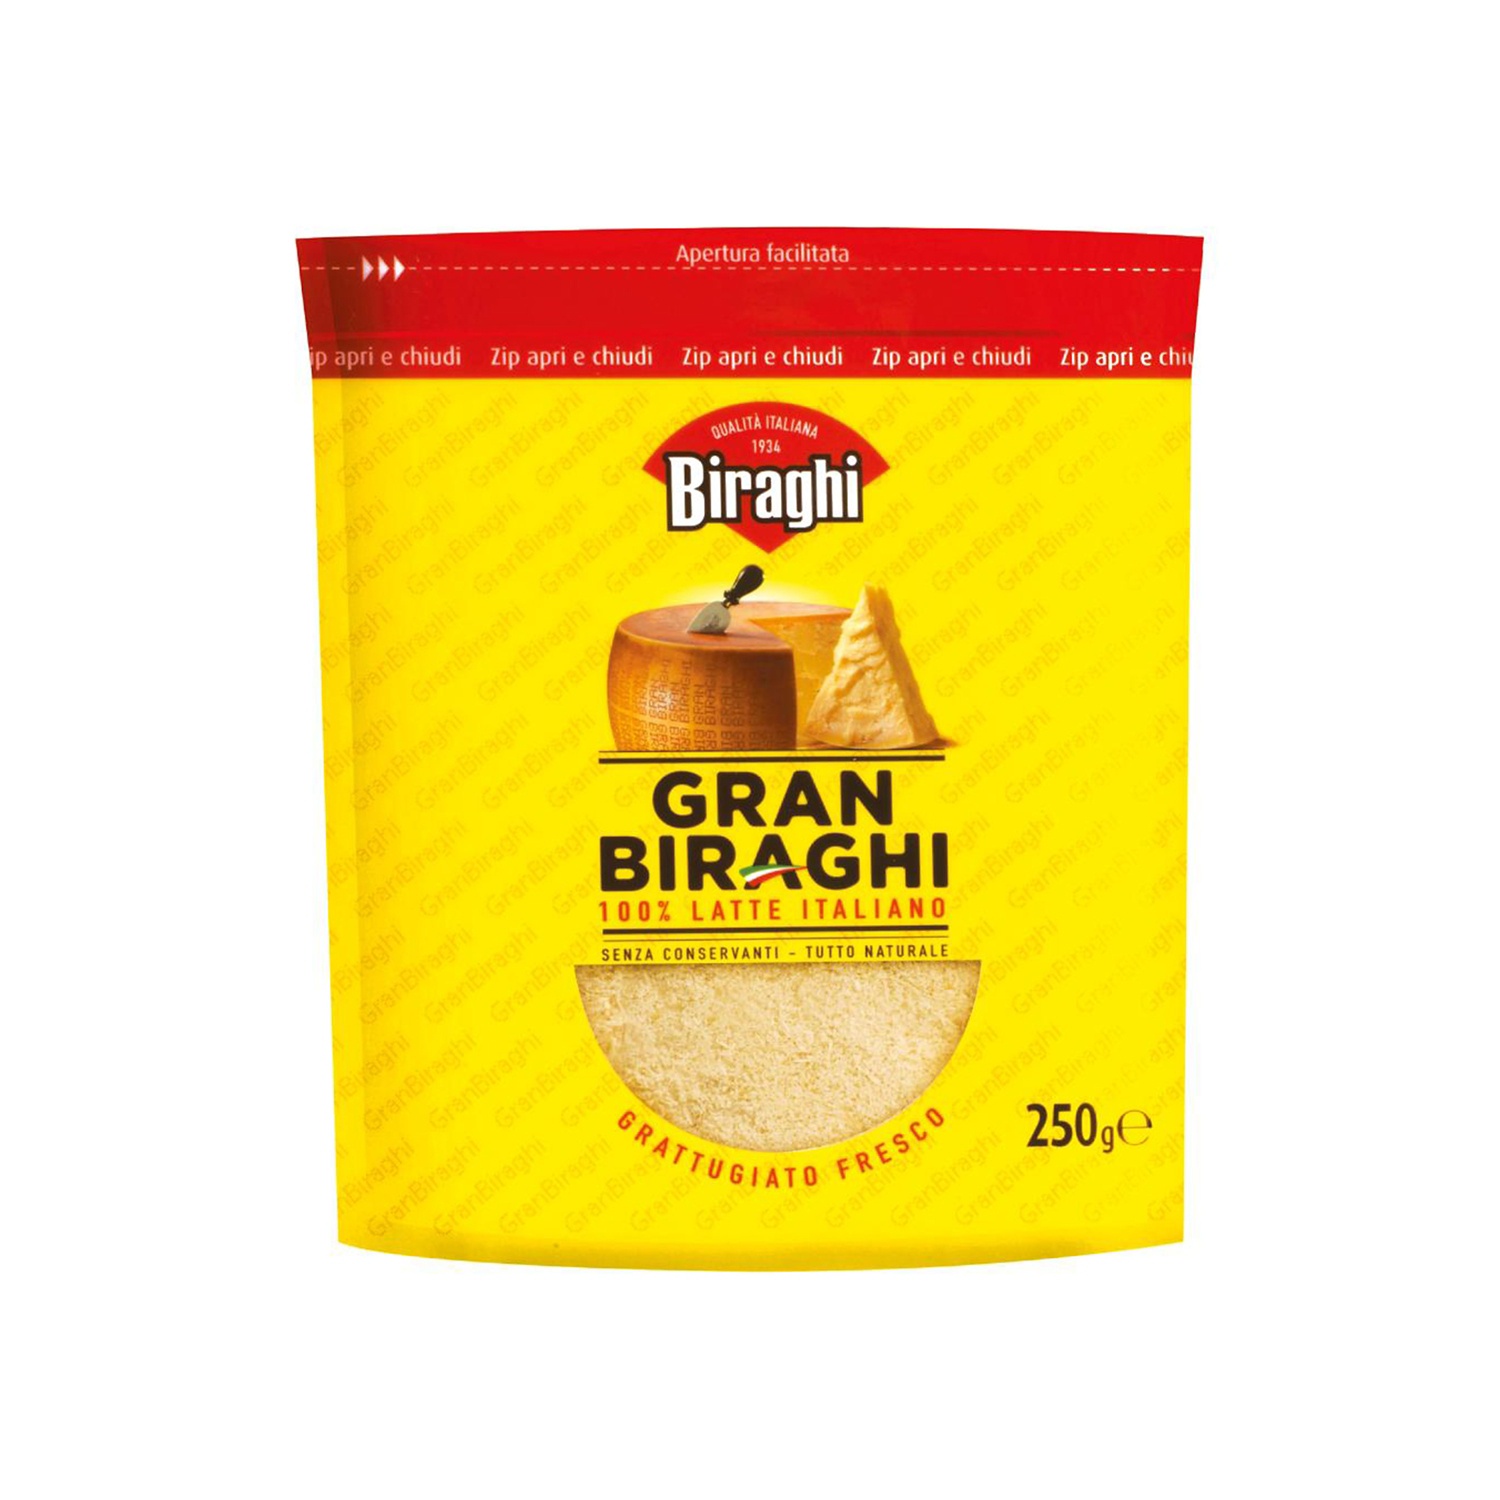 BIRAGHI Gran Biraghi grattugiato